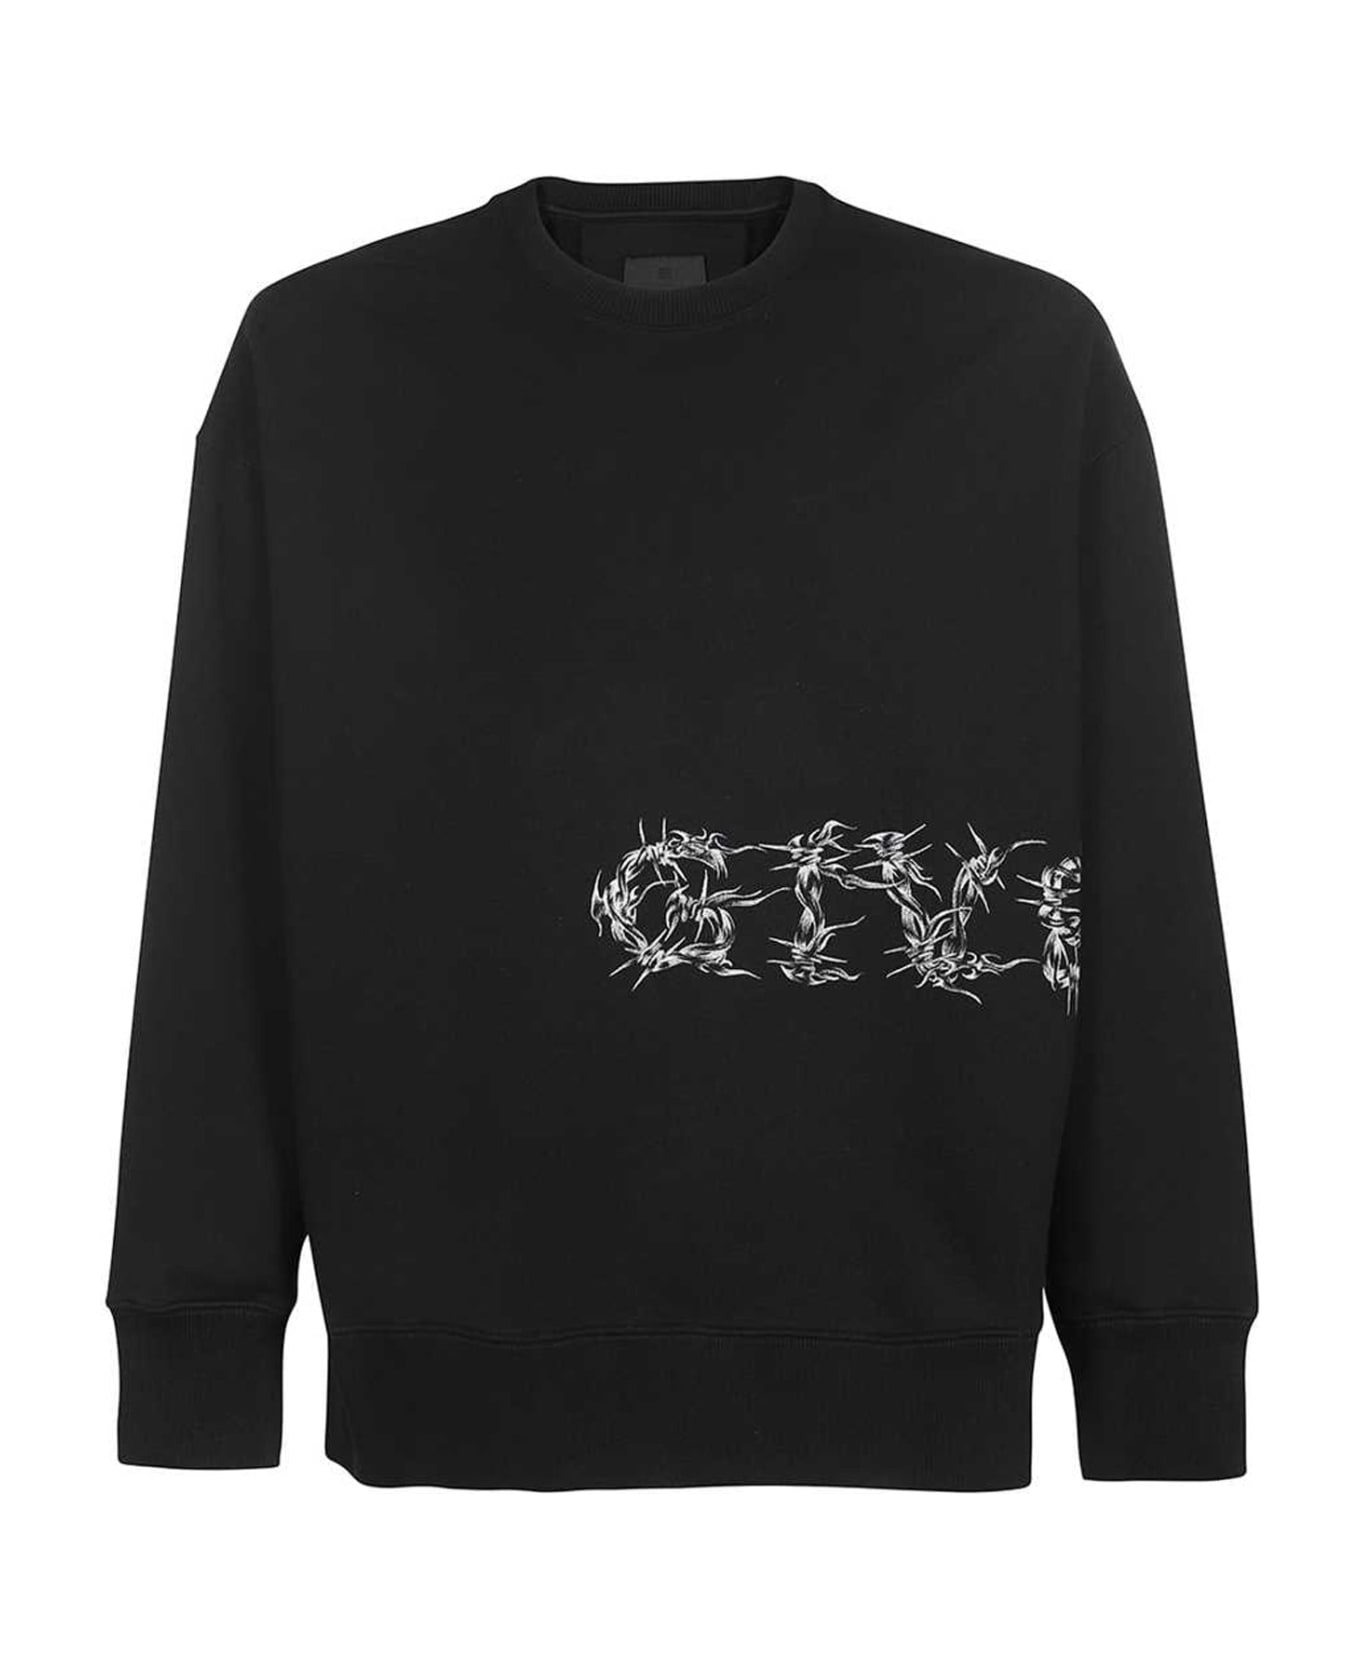 Givenchy Logo Sweartshirt - Black